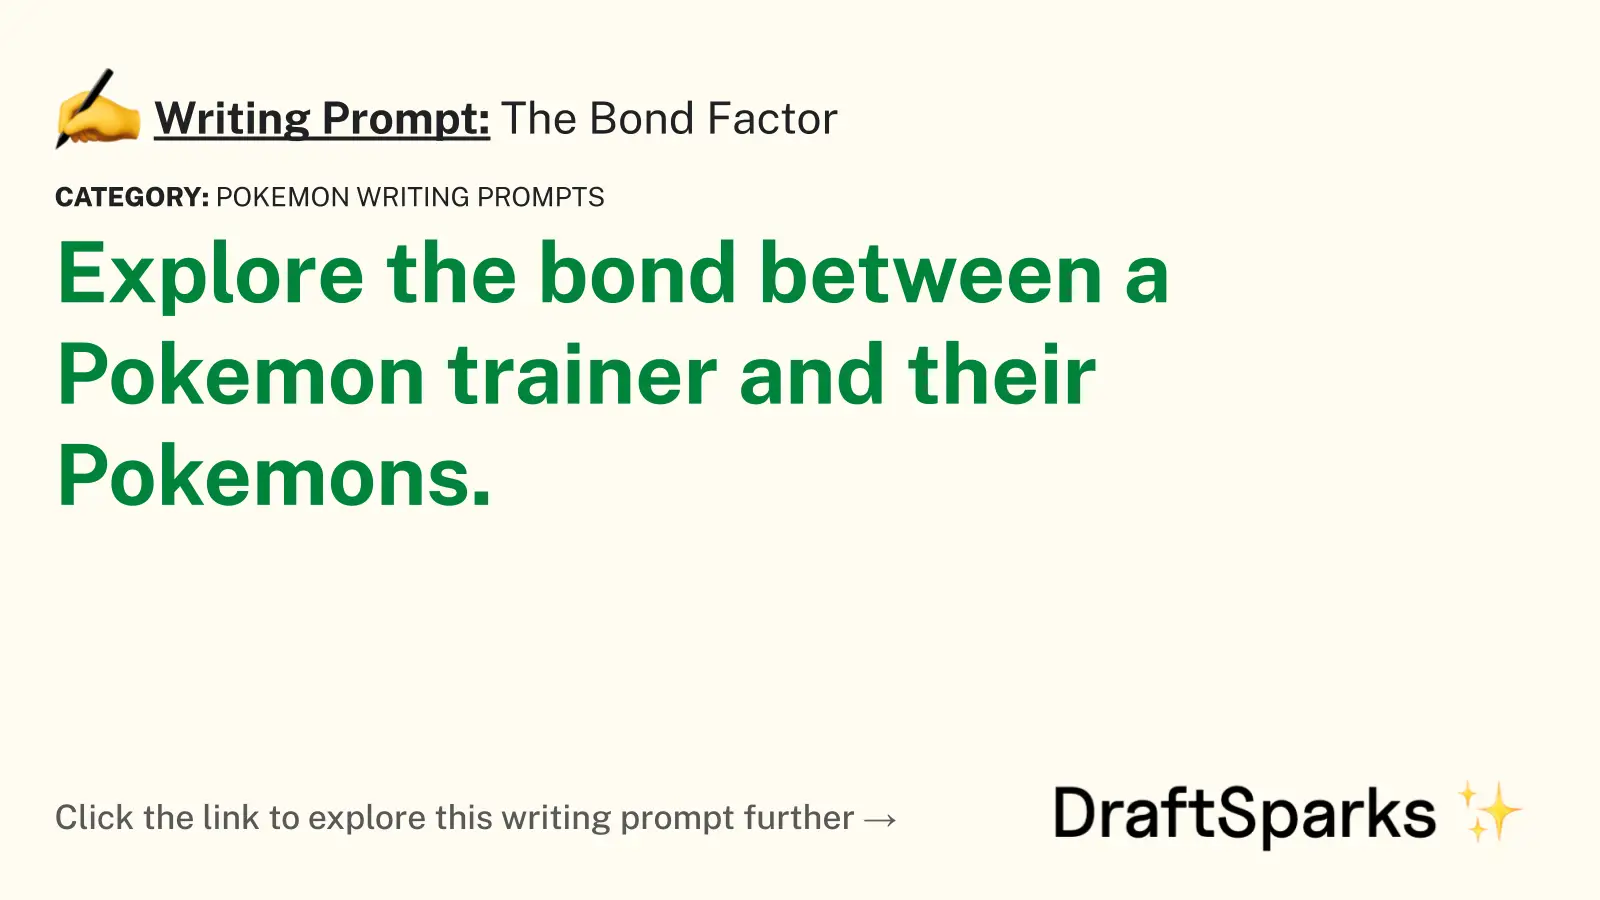 The Bond Factor